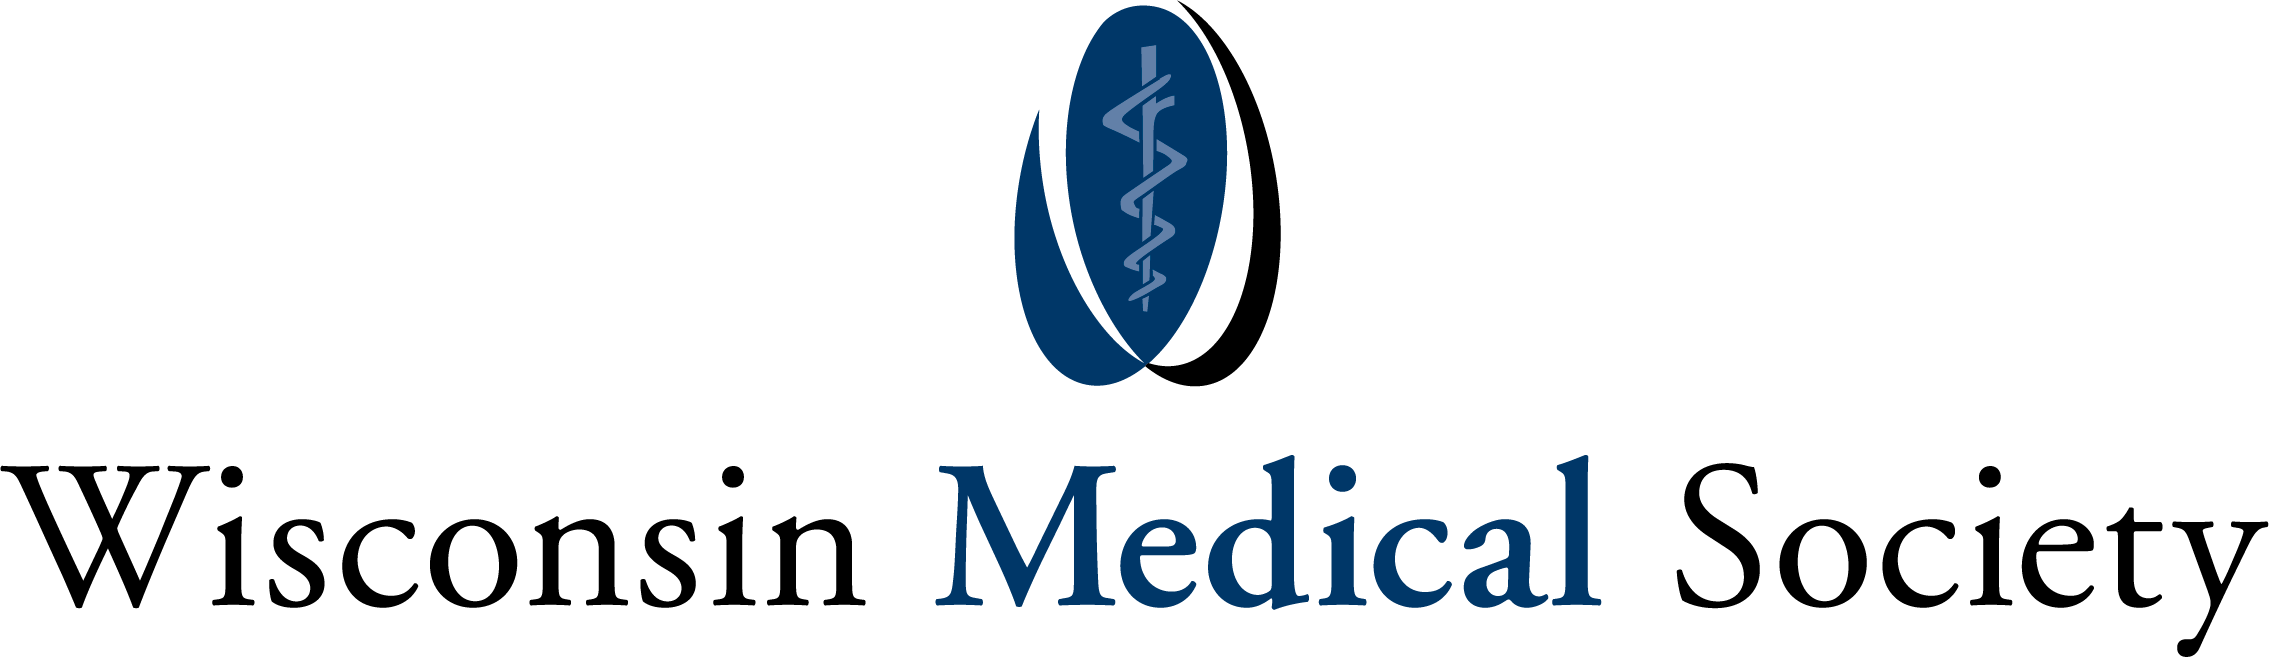 Wisconsin Medical Society Logo